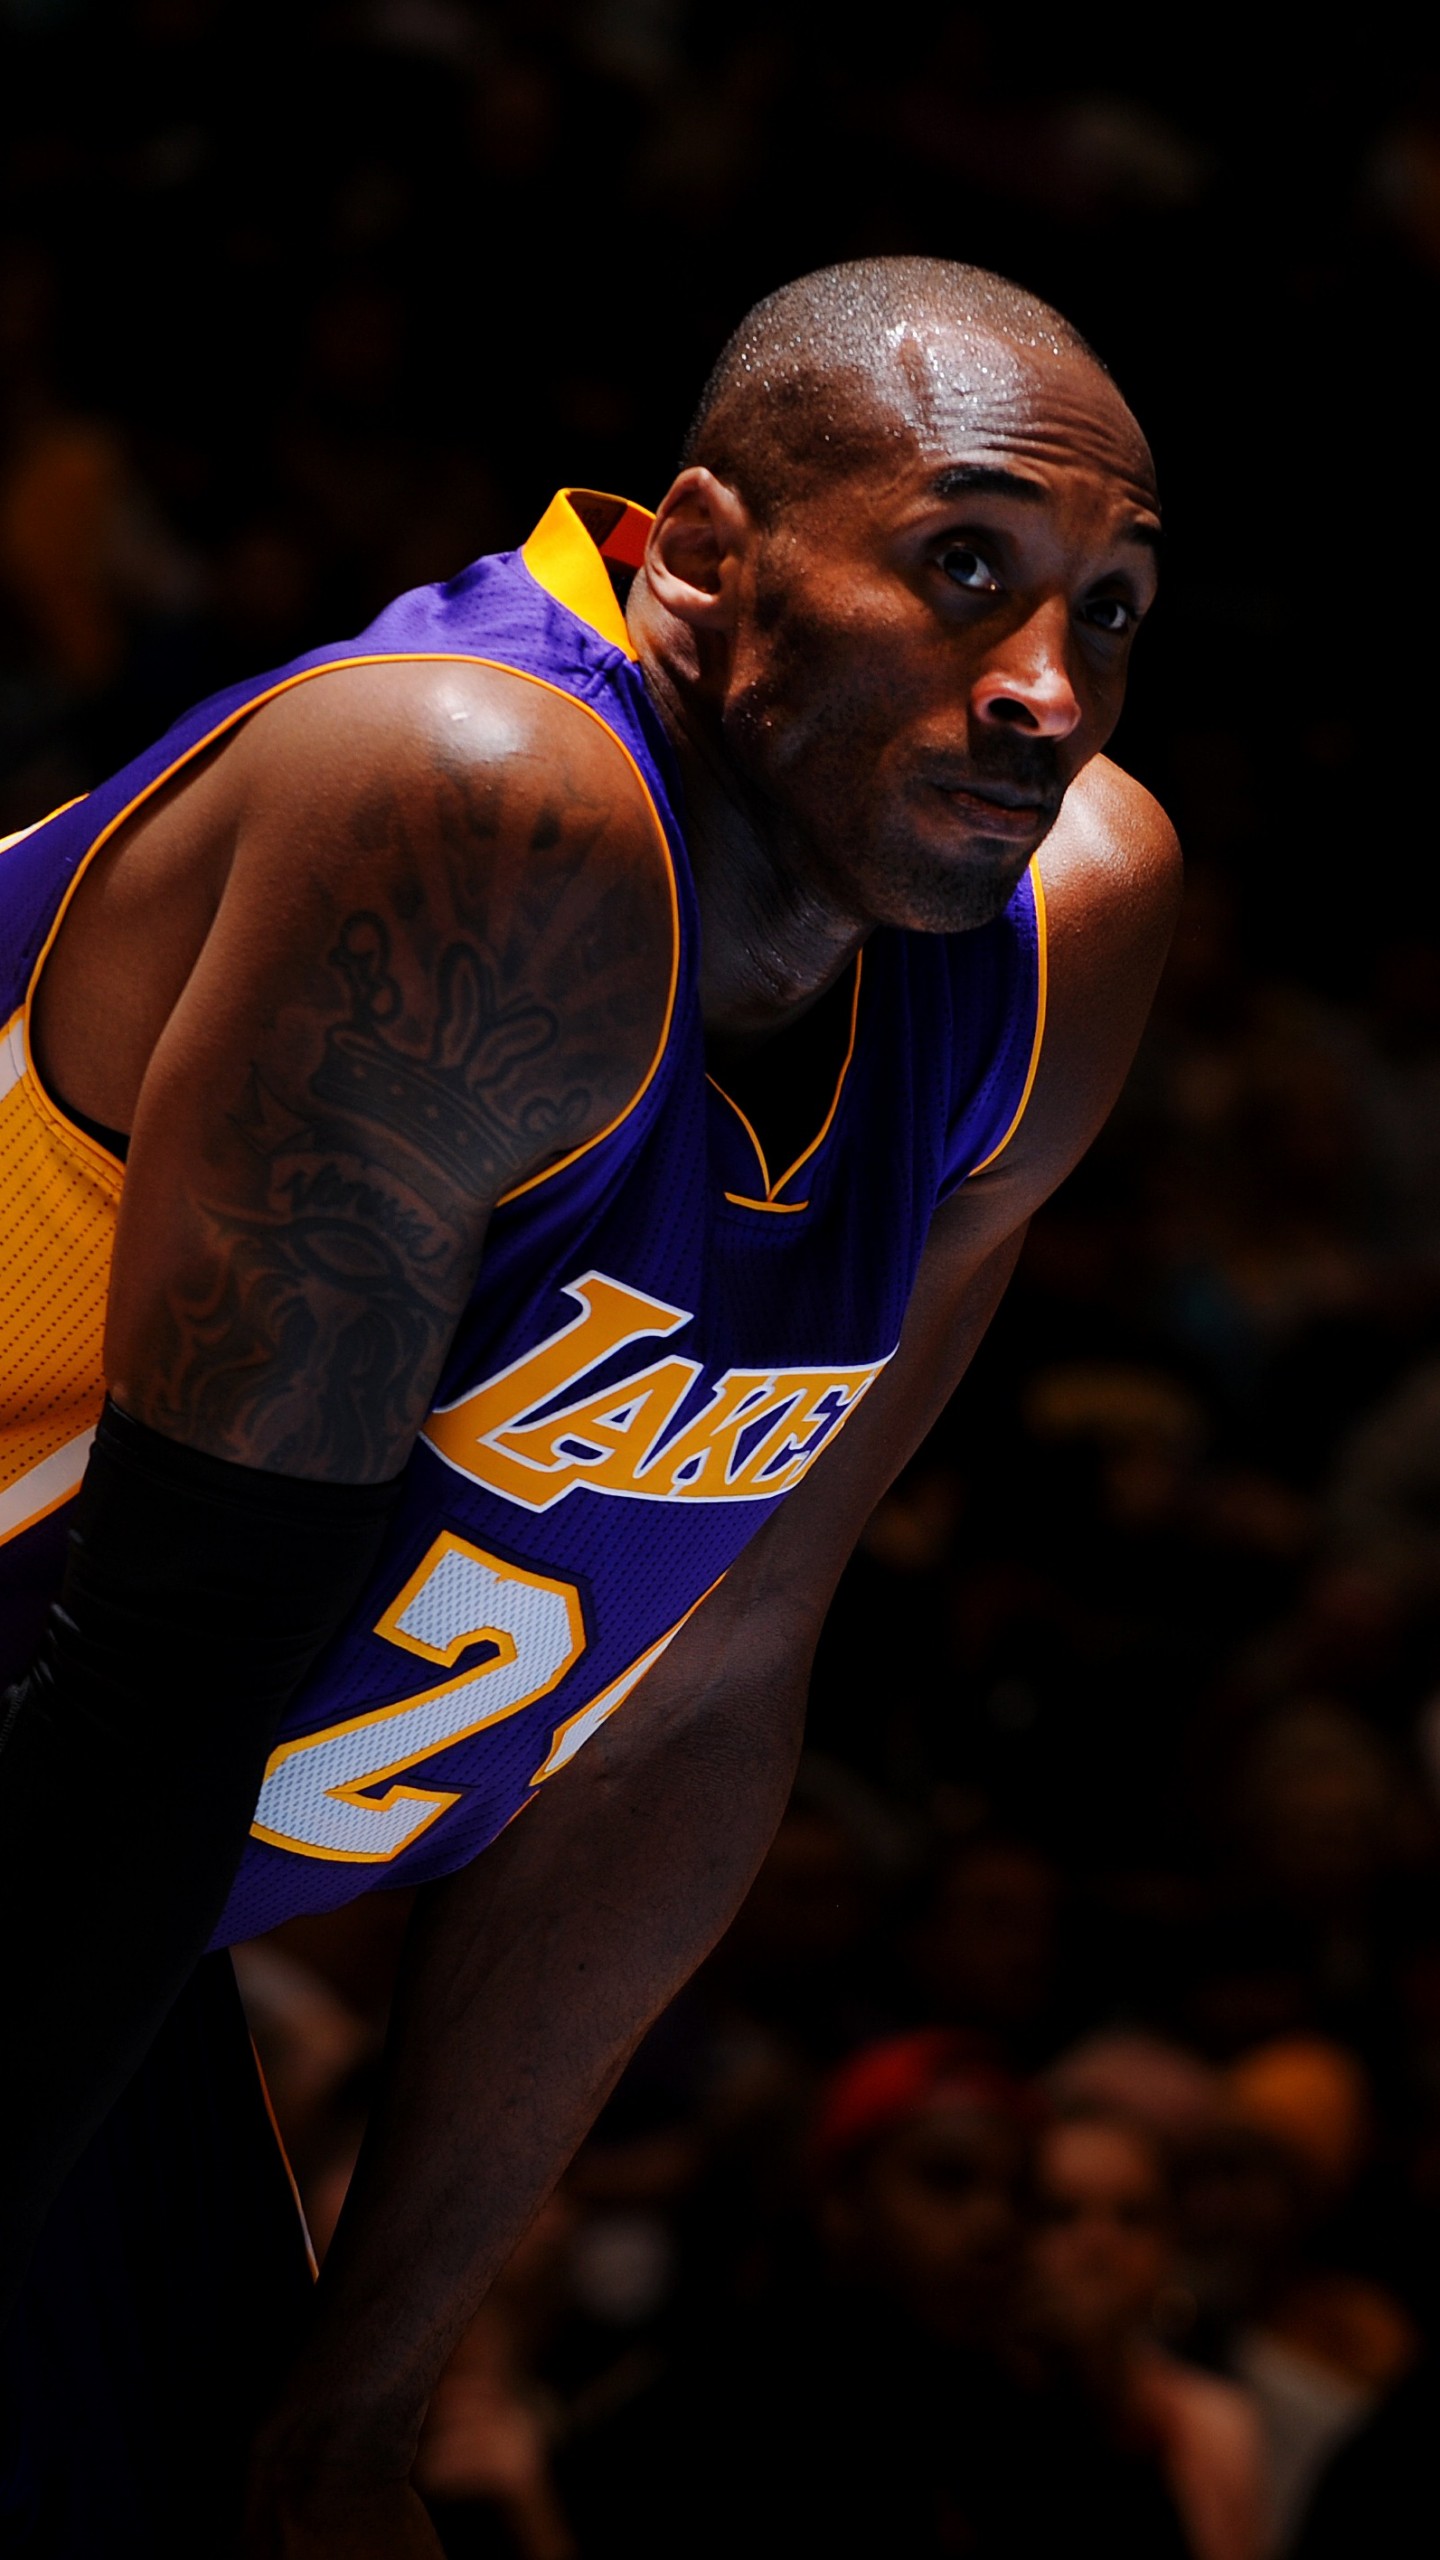 Wallpaper NBA Kobe Bryant Best Basketball Players of 2015 Los Angeles  Lakers basketball player Shooting guard Sport 2887